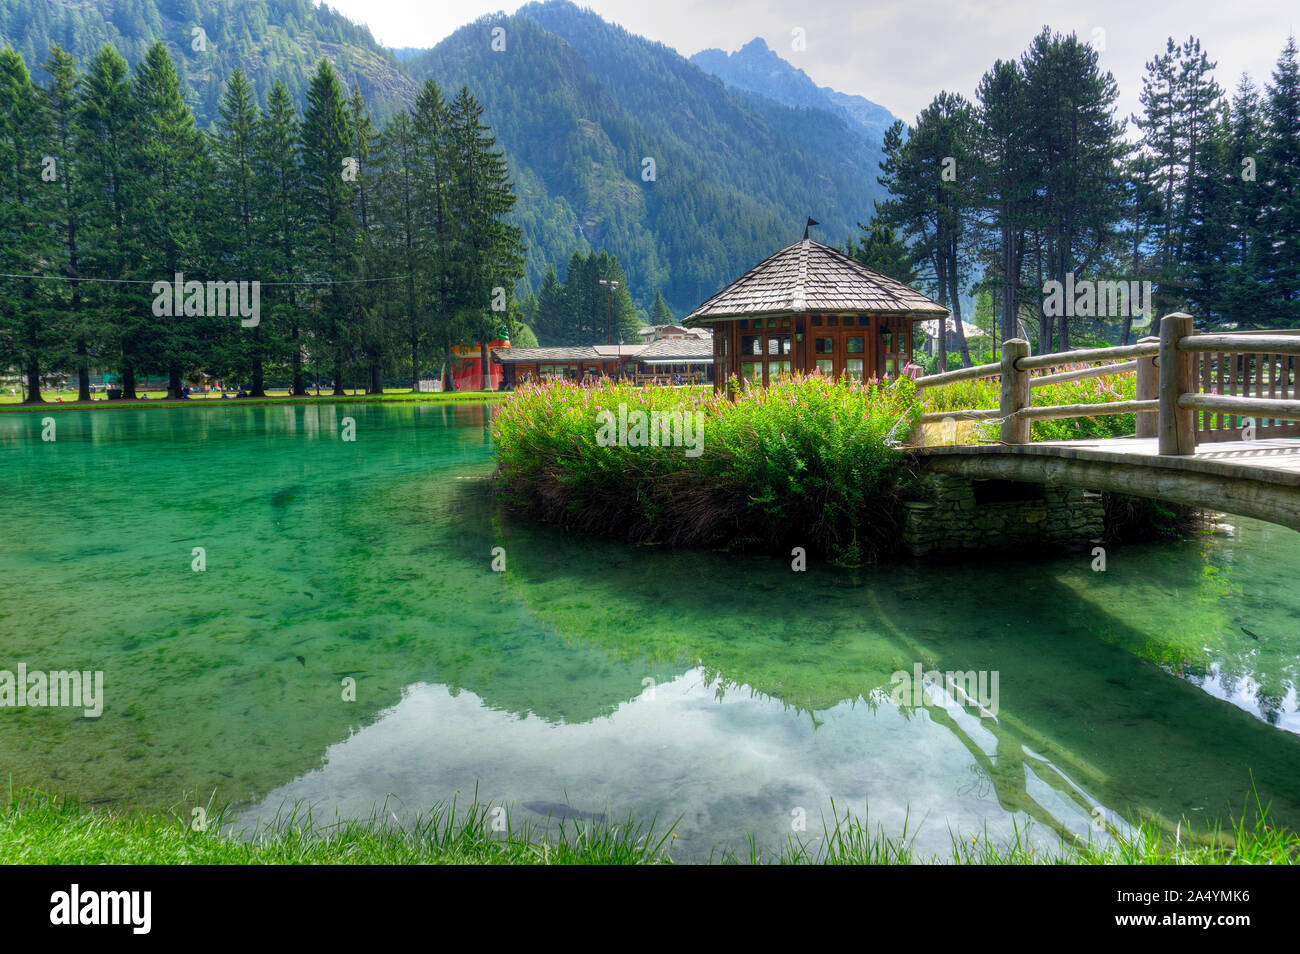 Italy, Aosta Valley, Gressoney-Saint-Jean, Lago di Gover Stock Photo - Alamy